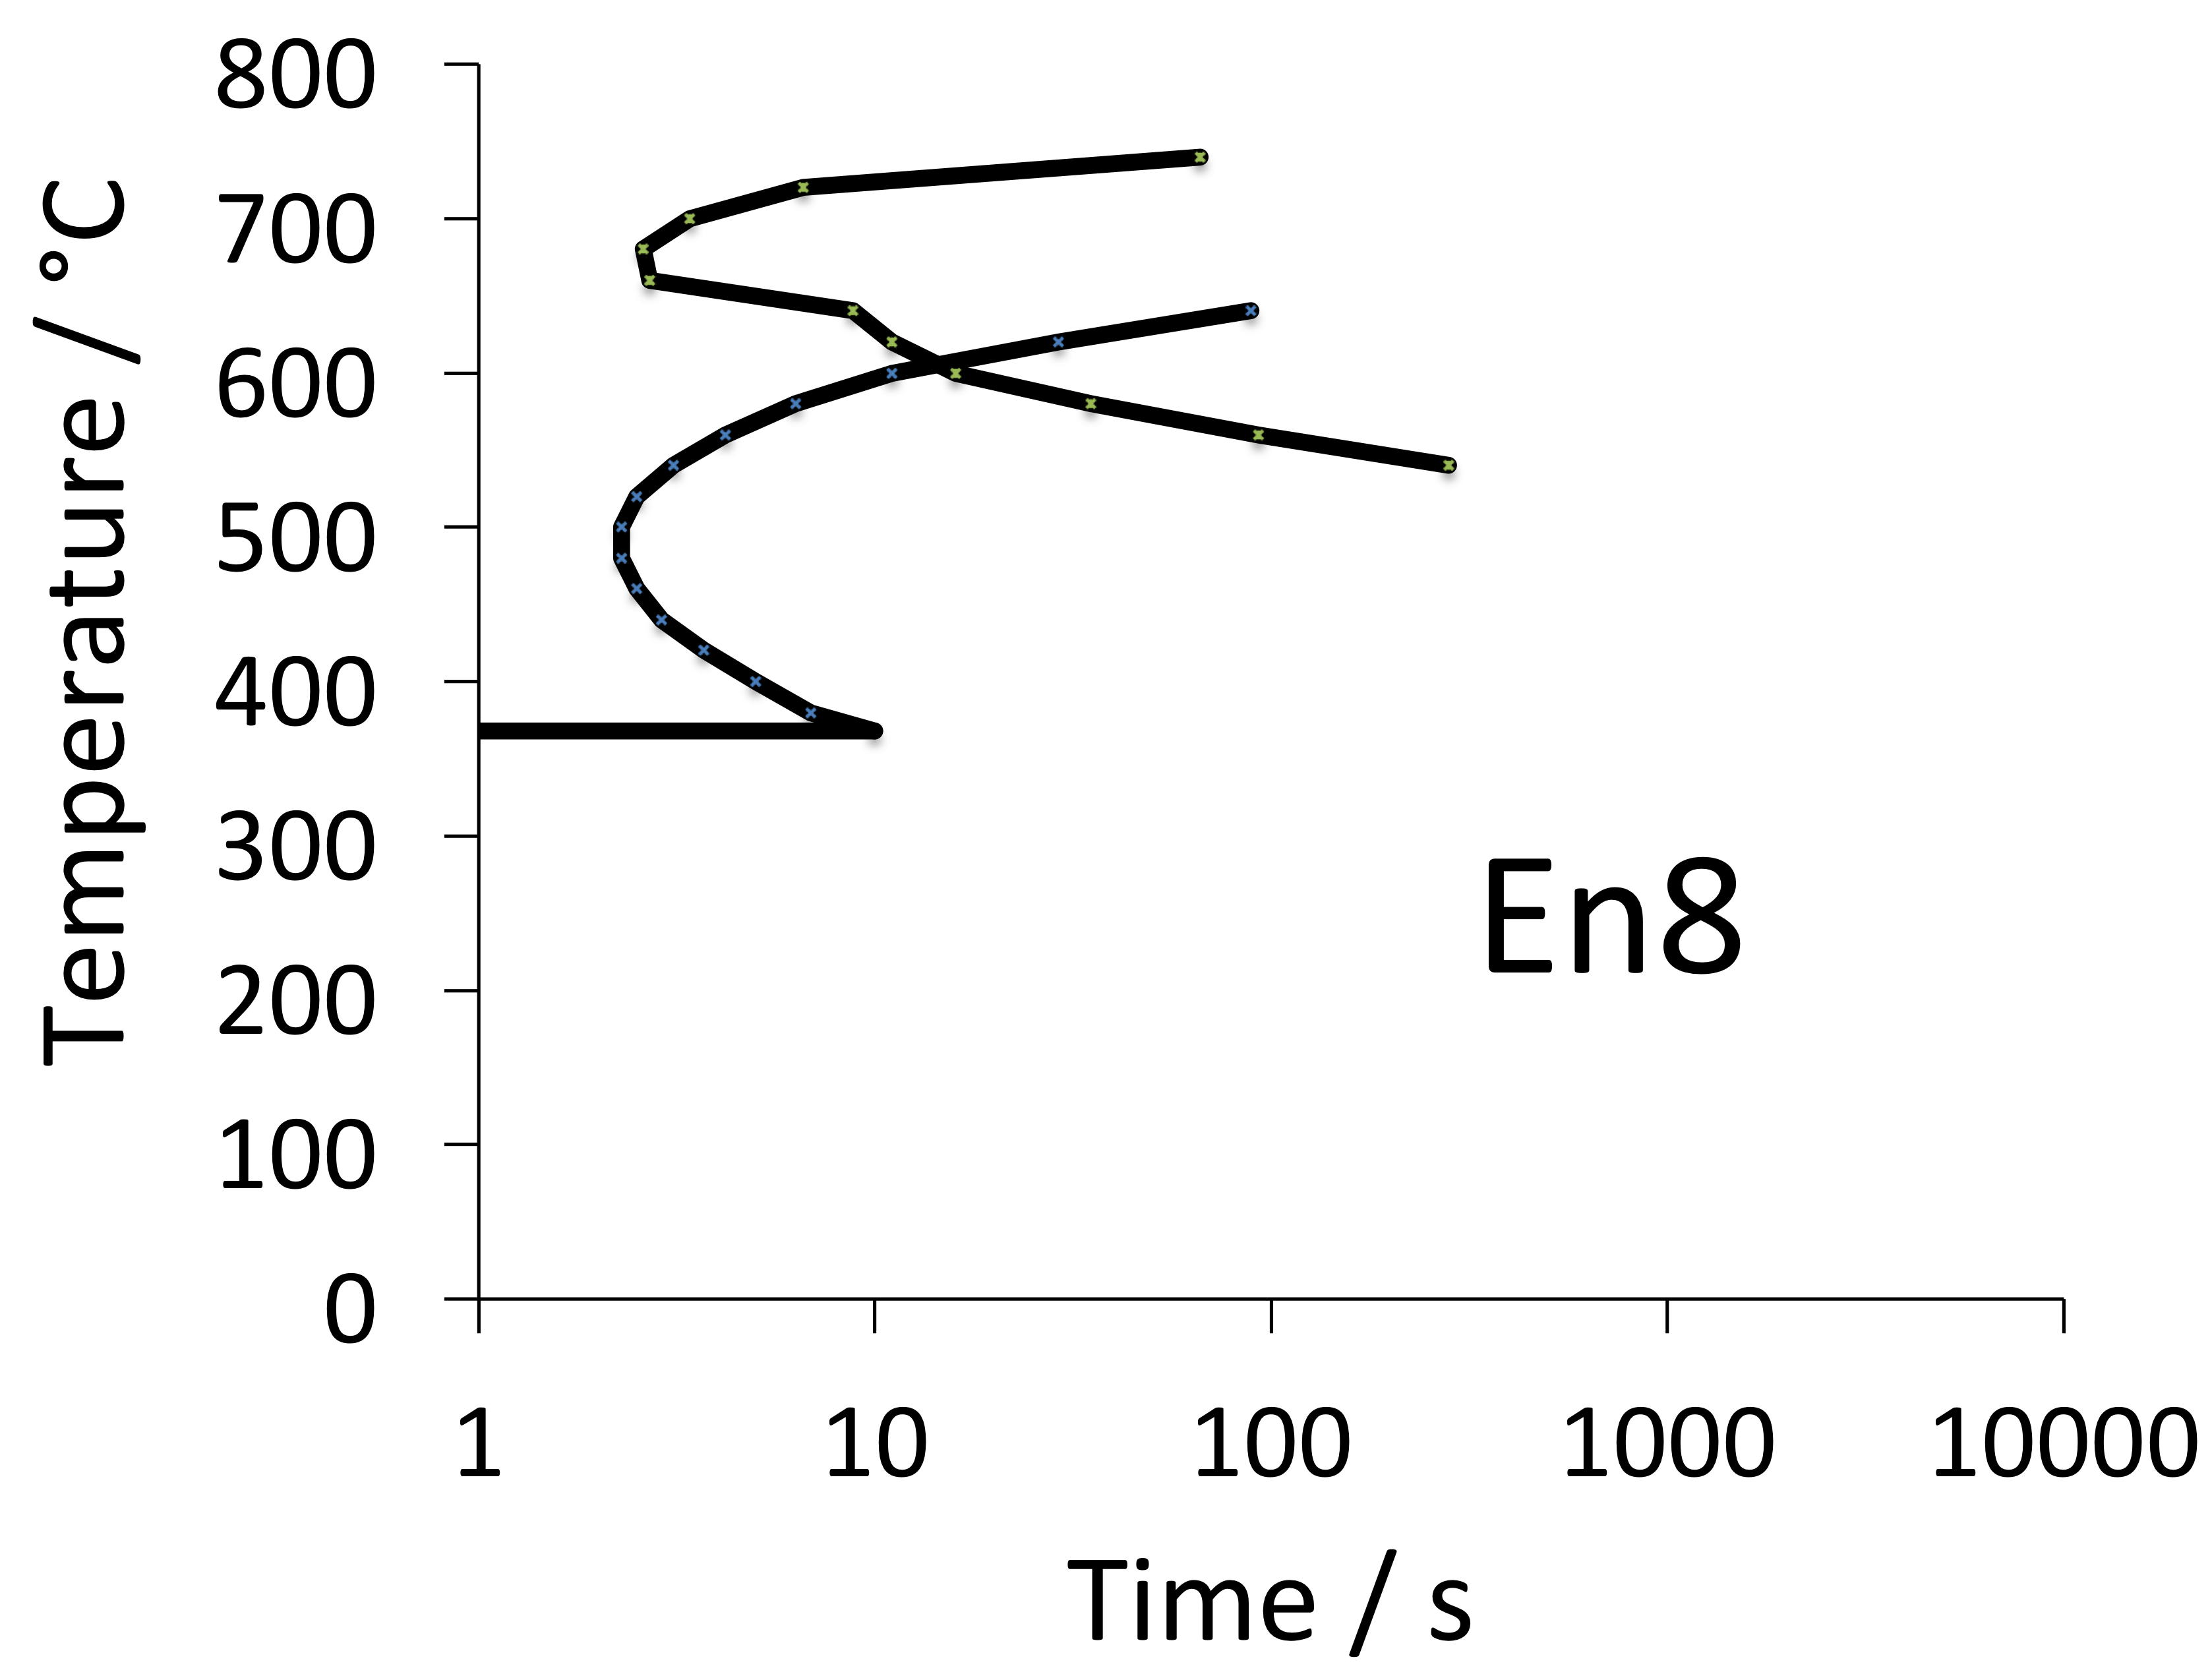 En8 TTT curve calculated